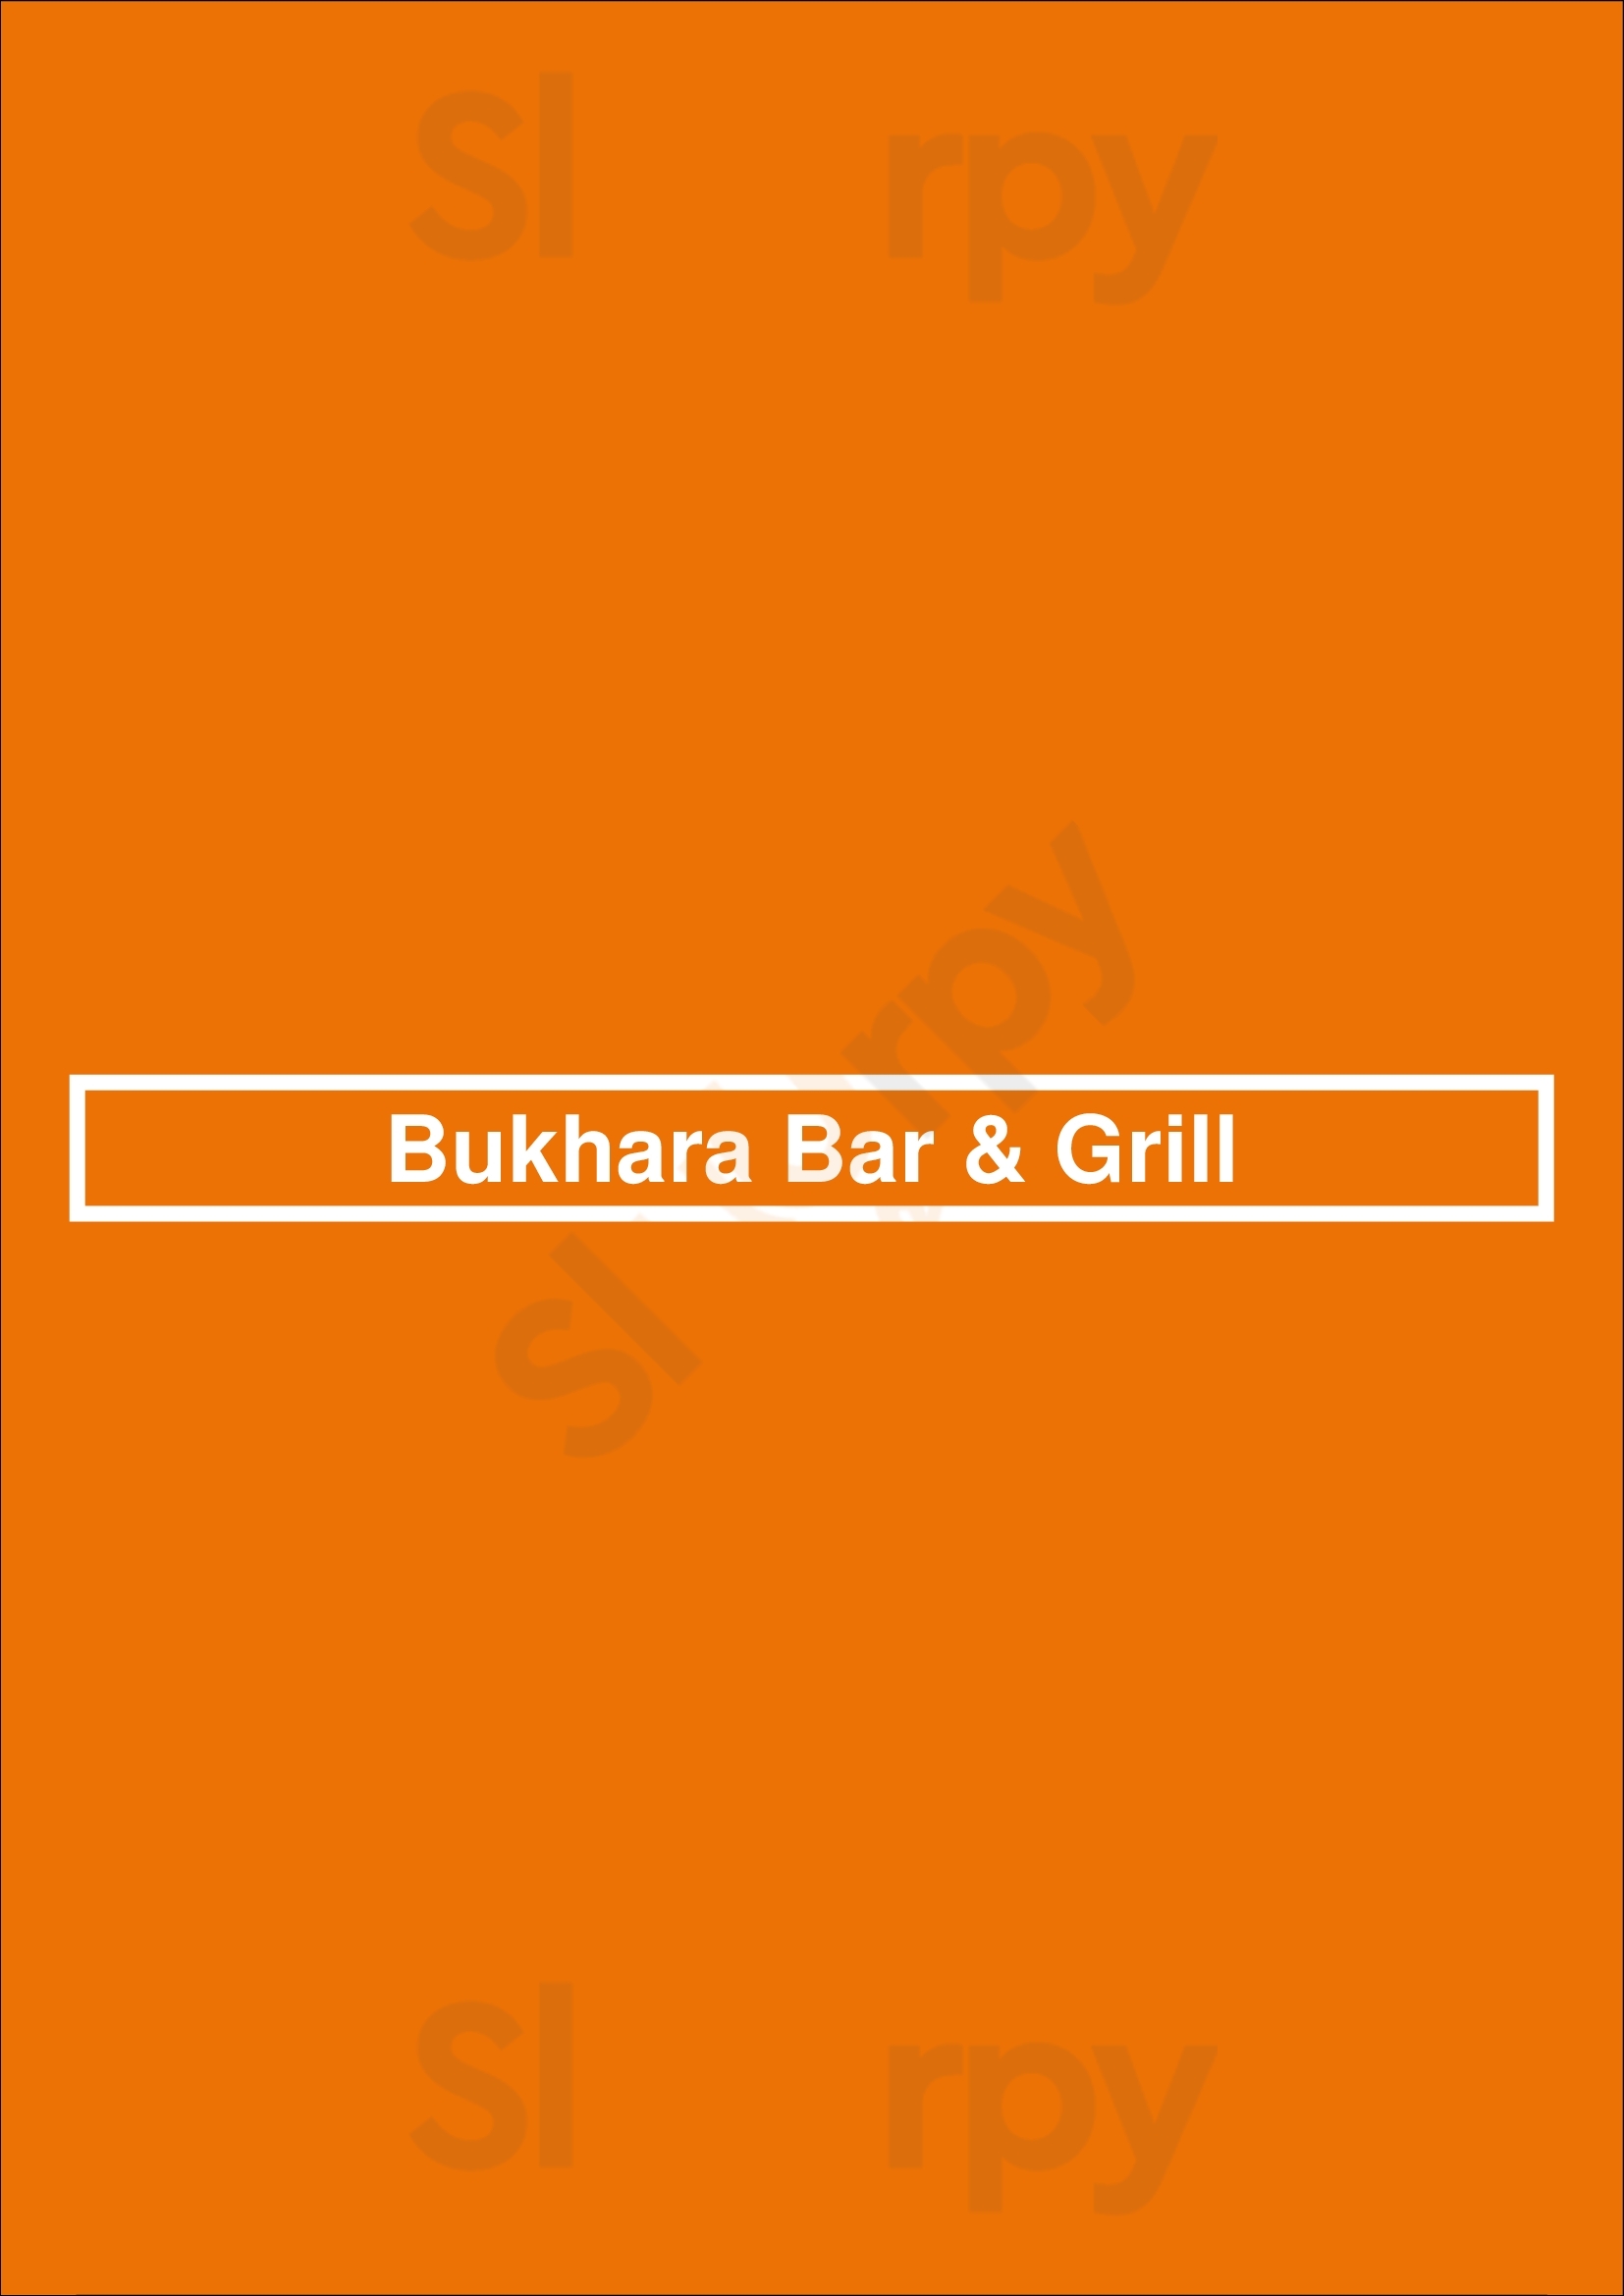 Bukhara Bar & Grill Issaquah Menu - 1